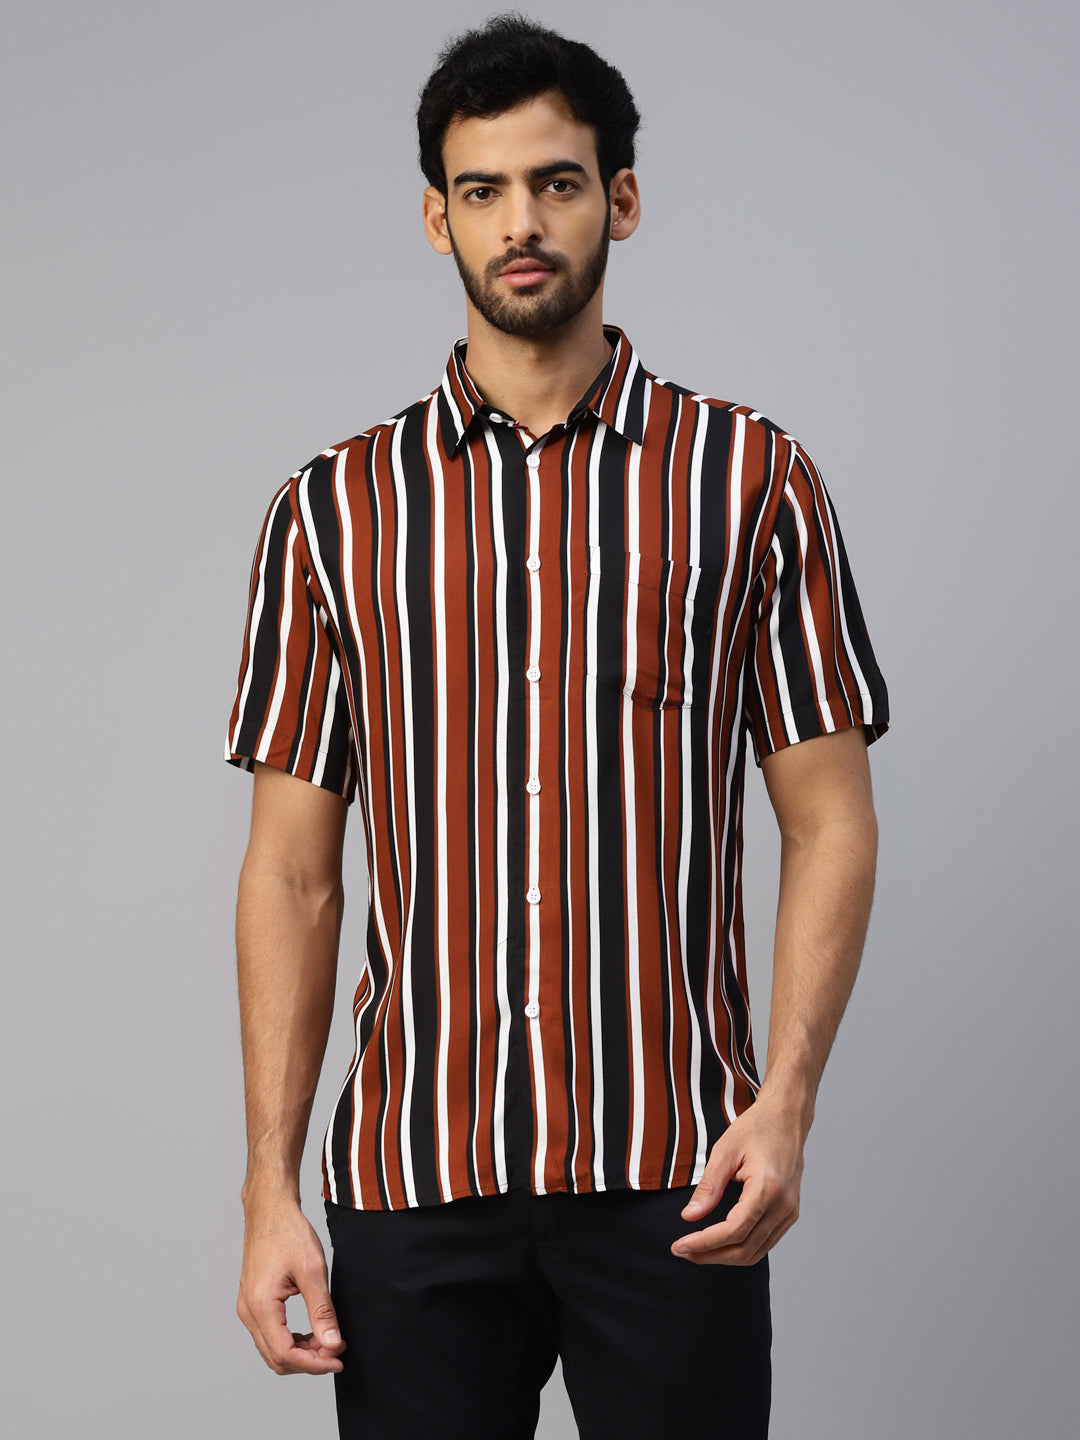 Don Vino Men's Multi-Color Stripes Slim Fit Resort Shirt